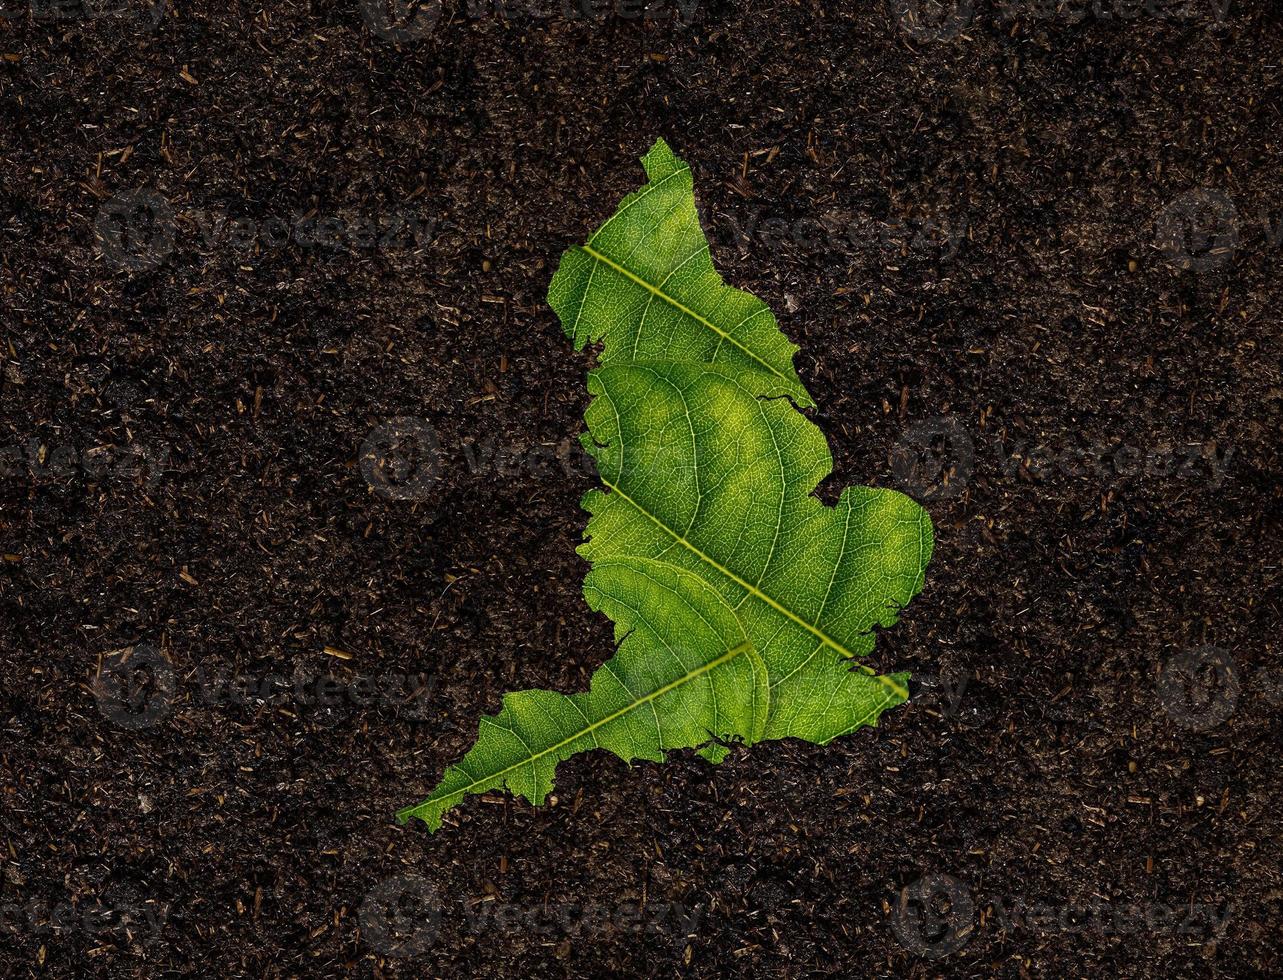 mapa da inglaterra feito de folhas verdes no conceito de ecologia de fundo do solo foto